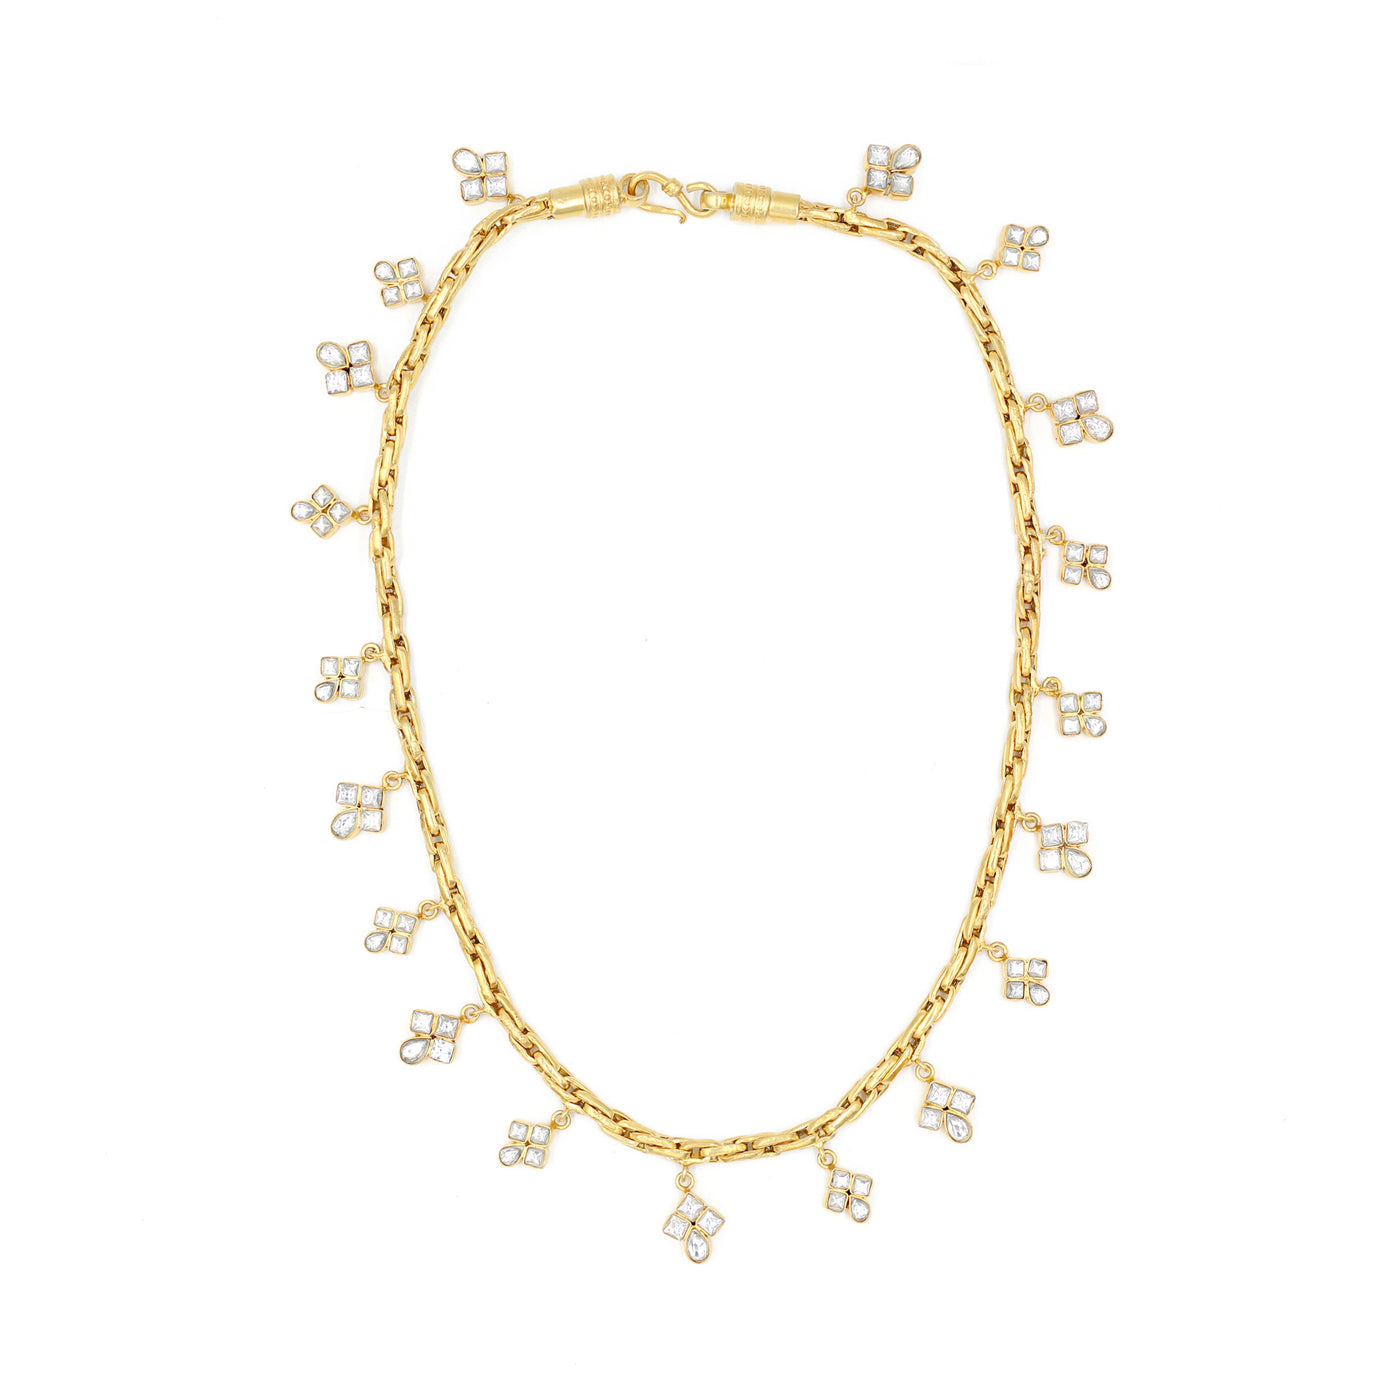 Raashi Khanna in 24k Gold Plated Necklace Studded With Kundan Gemstone